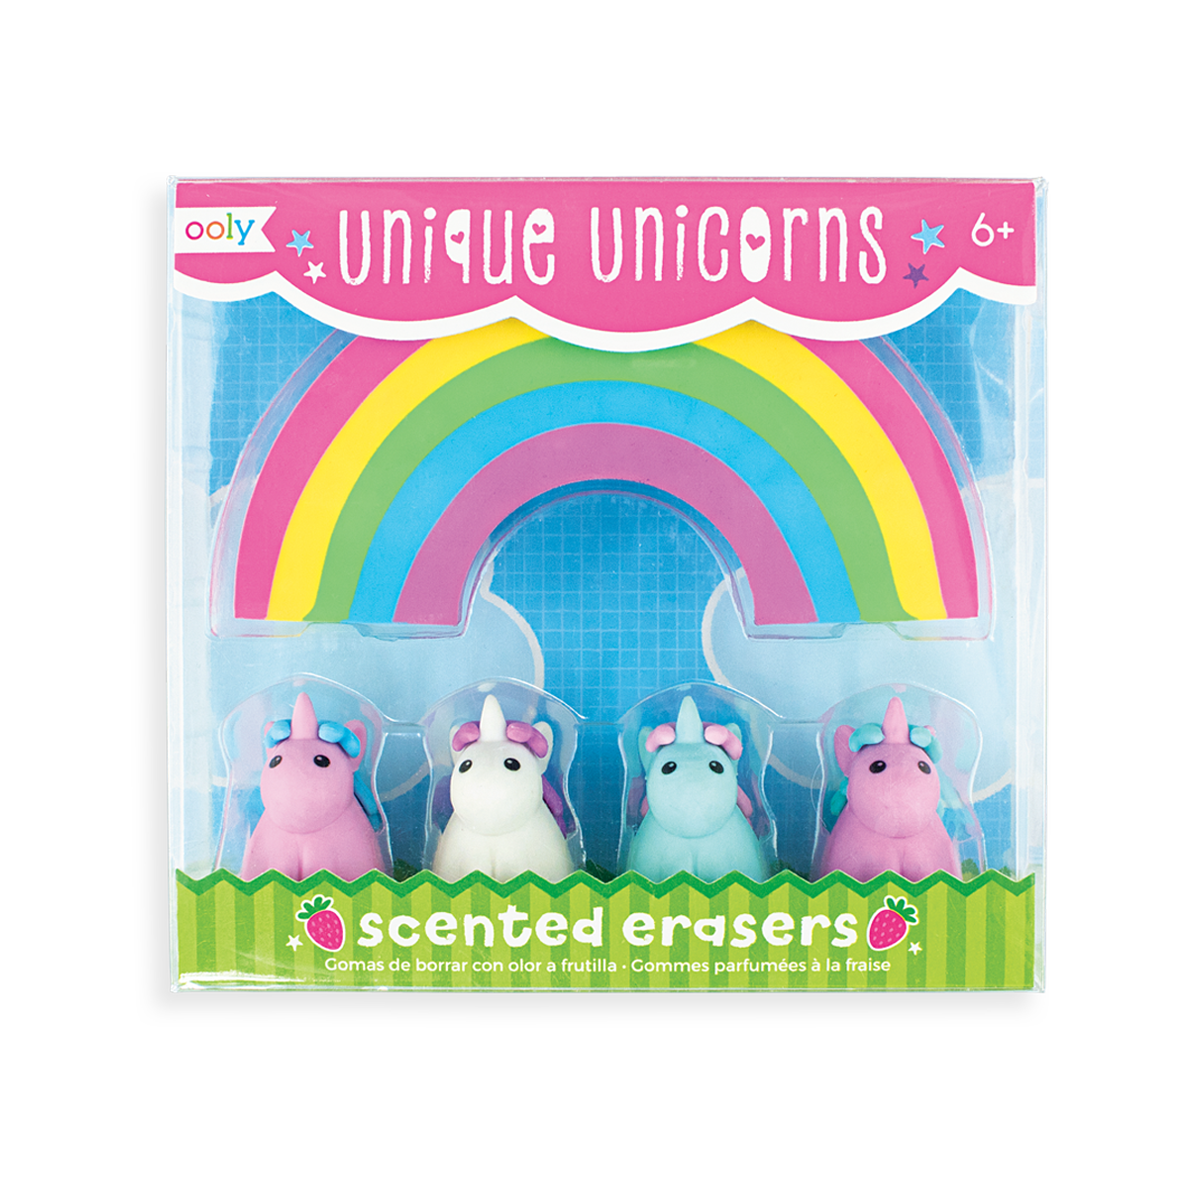 Unique Unicorns strawberry scented unicorn erasers with a large rainbow eraser